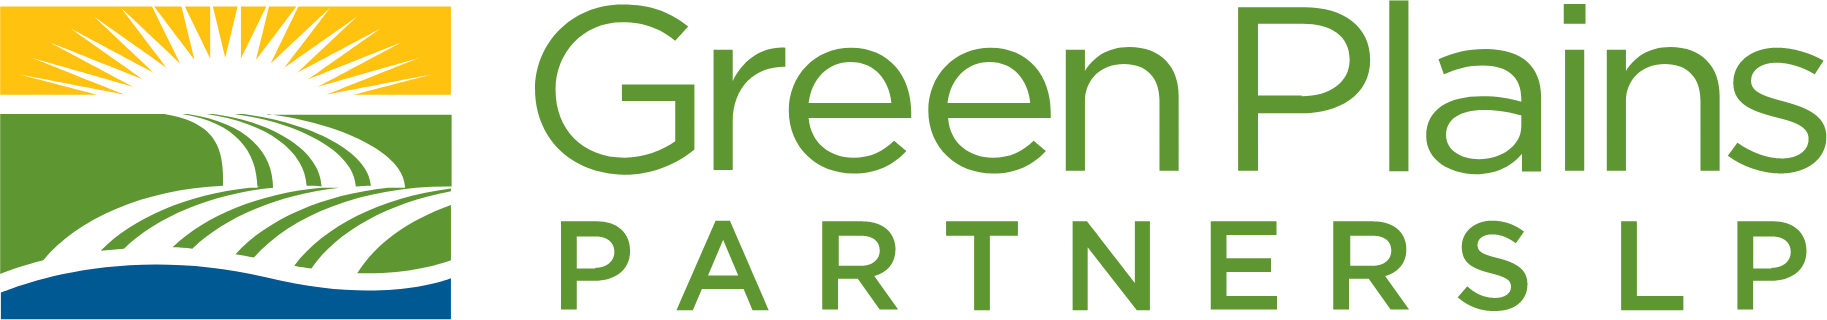 Green Plains Partners
 logo large (transparent PNG)